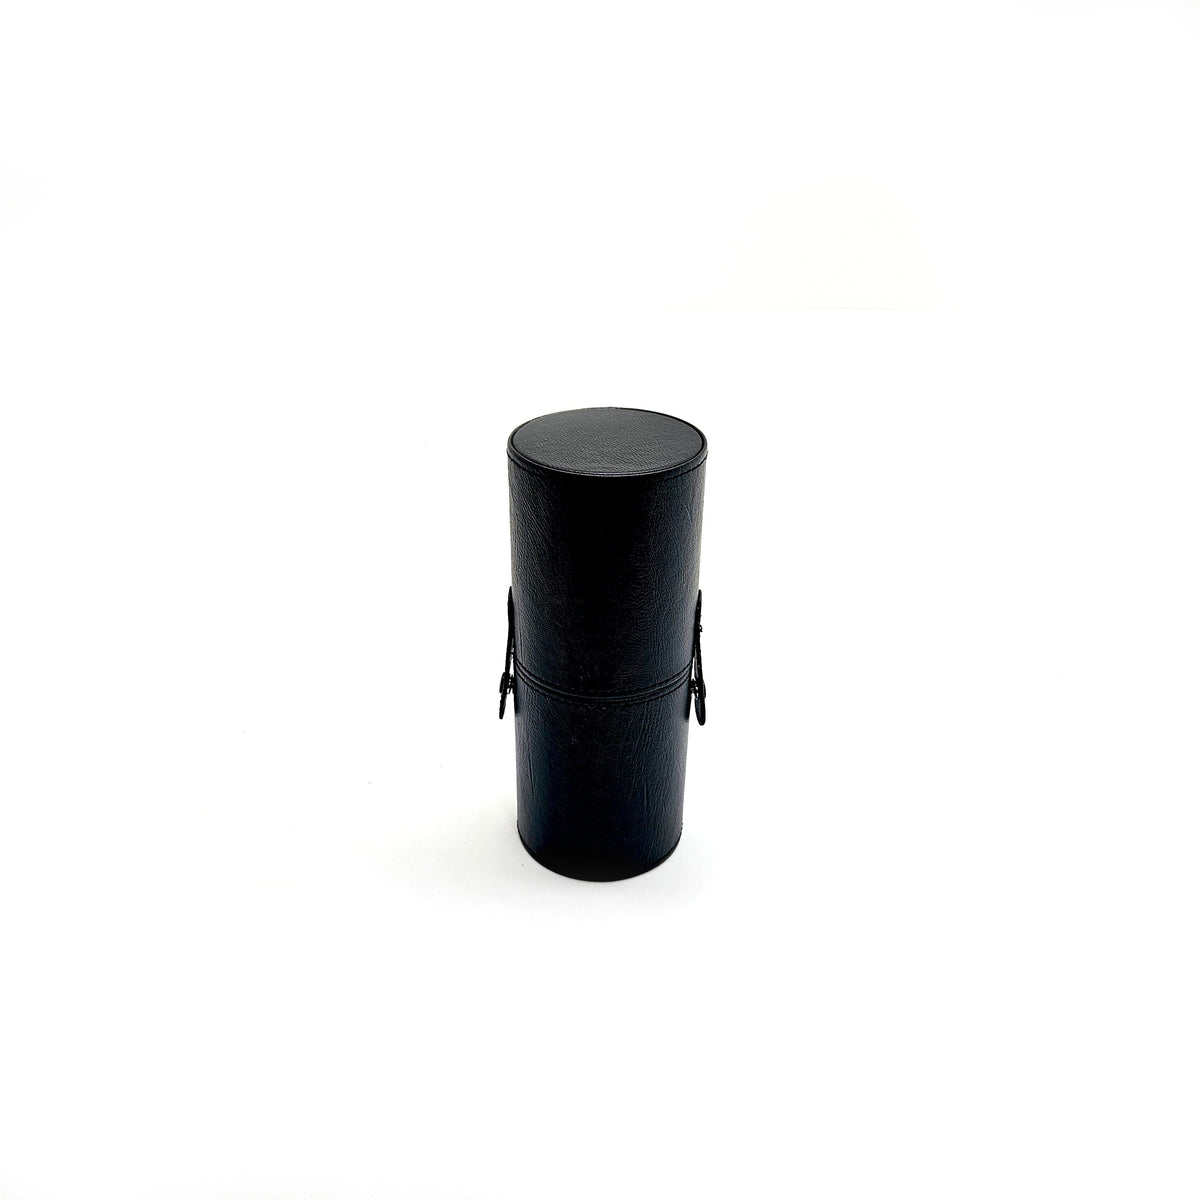 15-Piece Make Up Brush Set with Black Cylinder Case